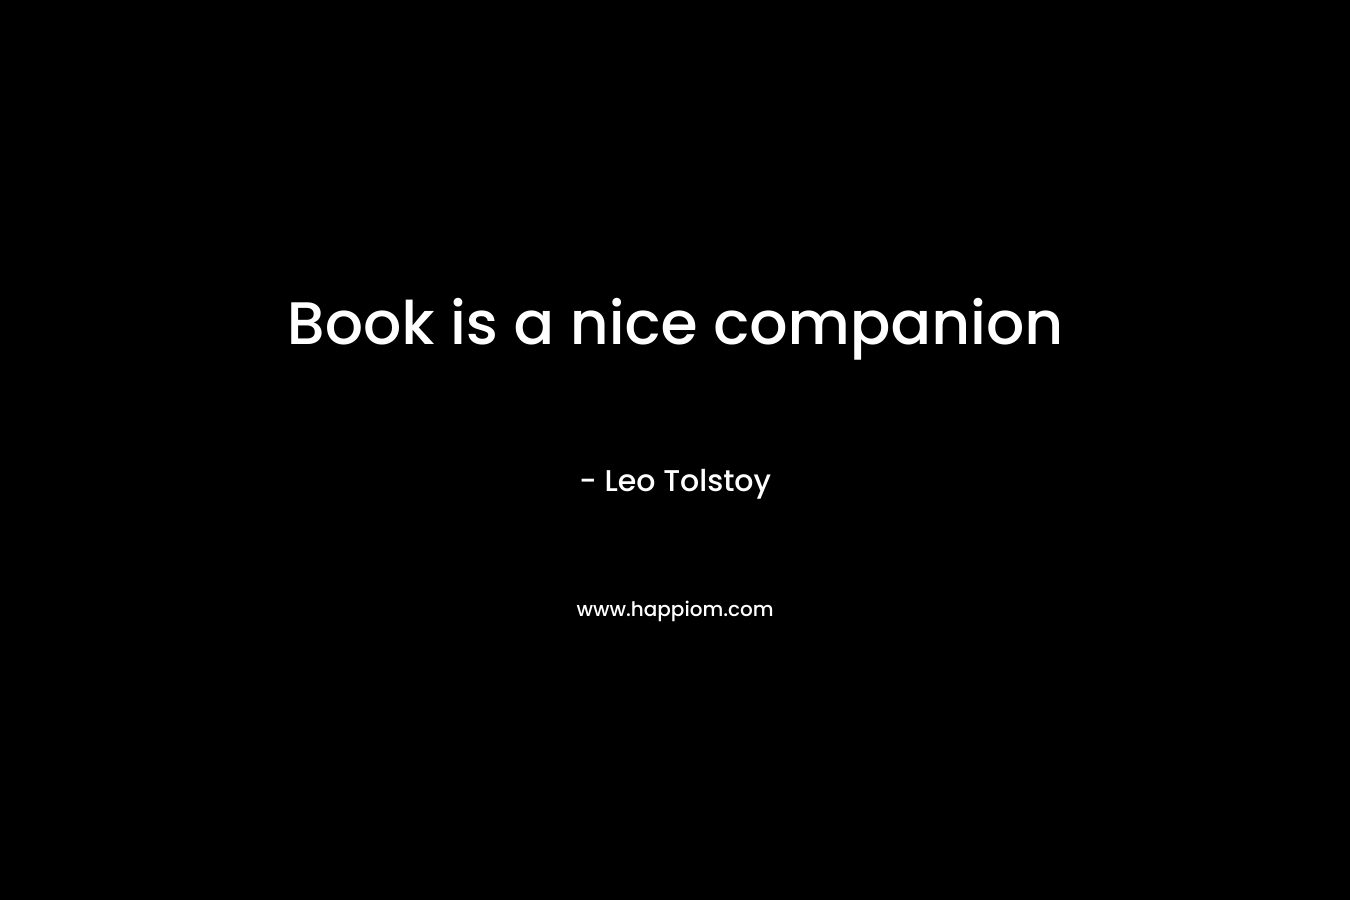 Book is a nice companion